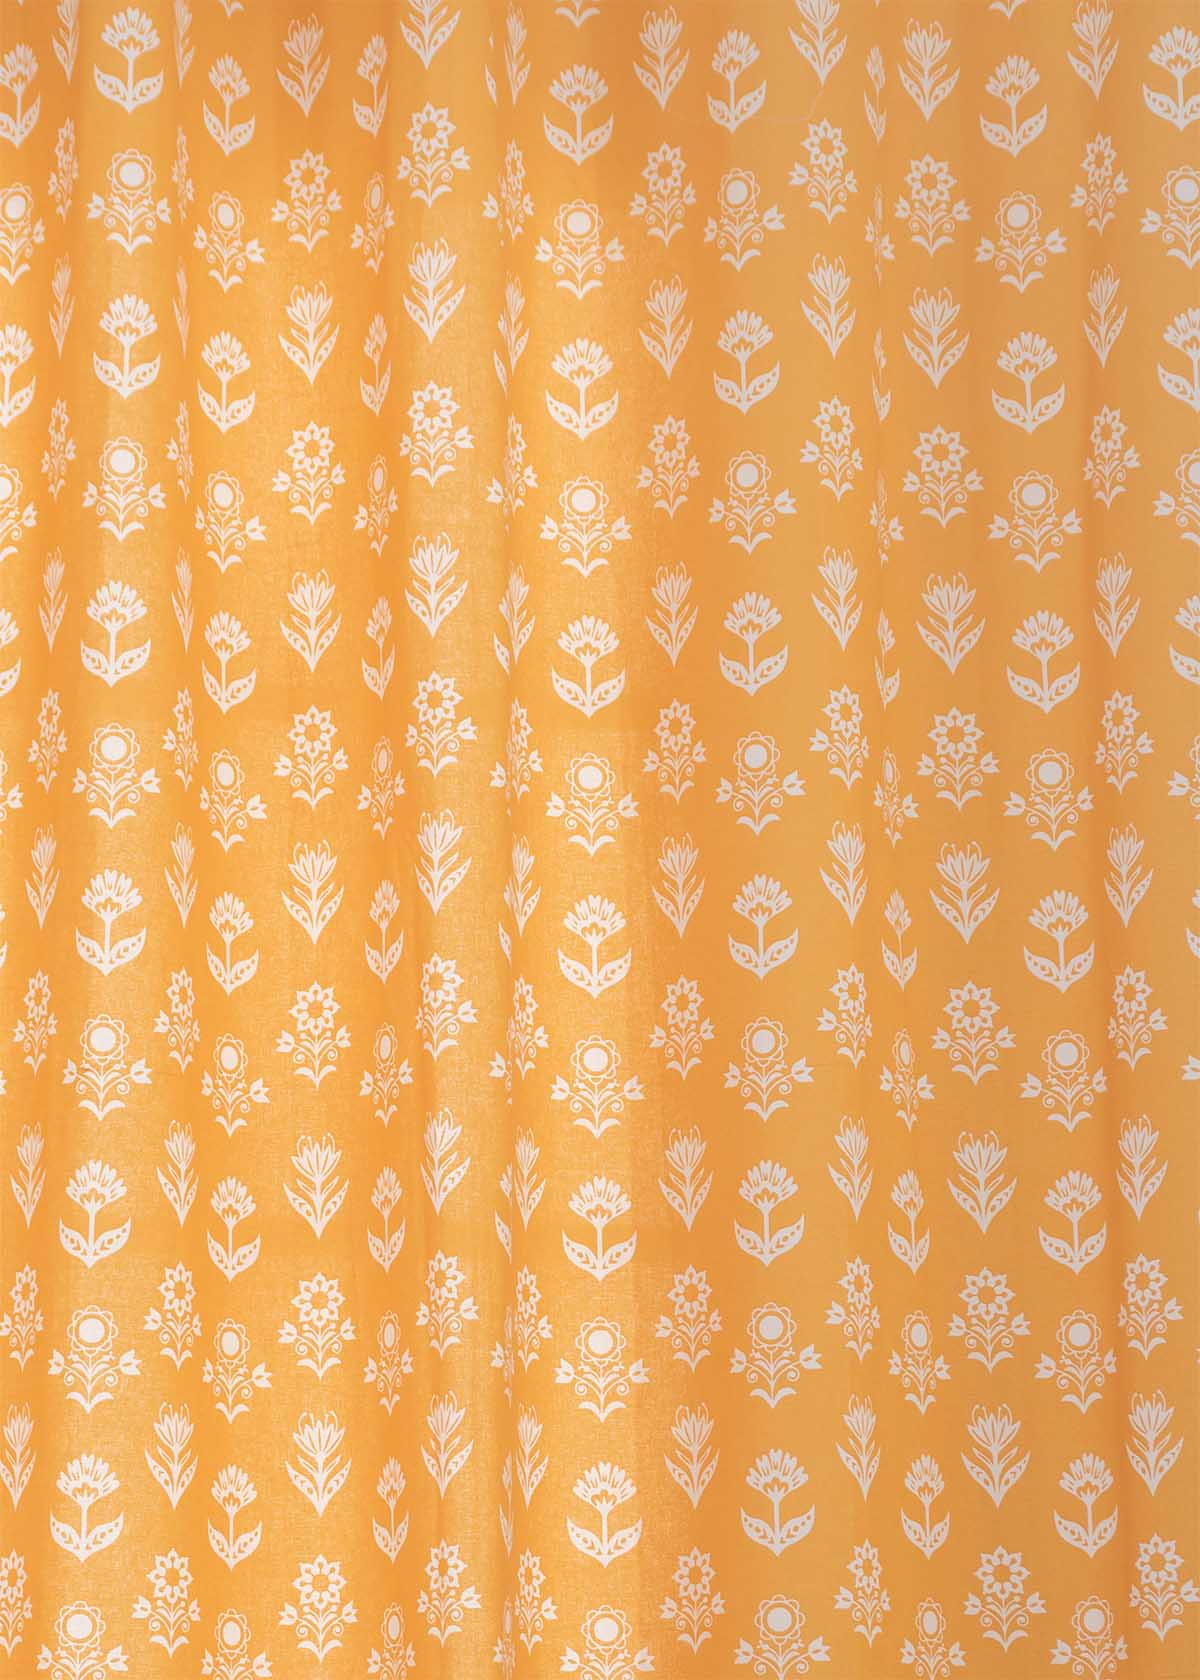 Dahlia printed cotton Fabric - Mustard